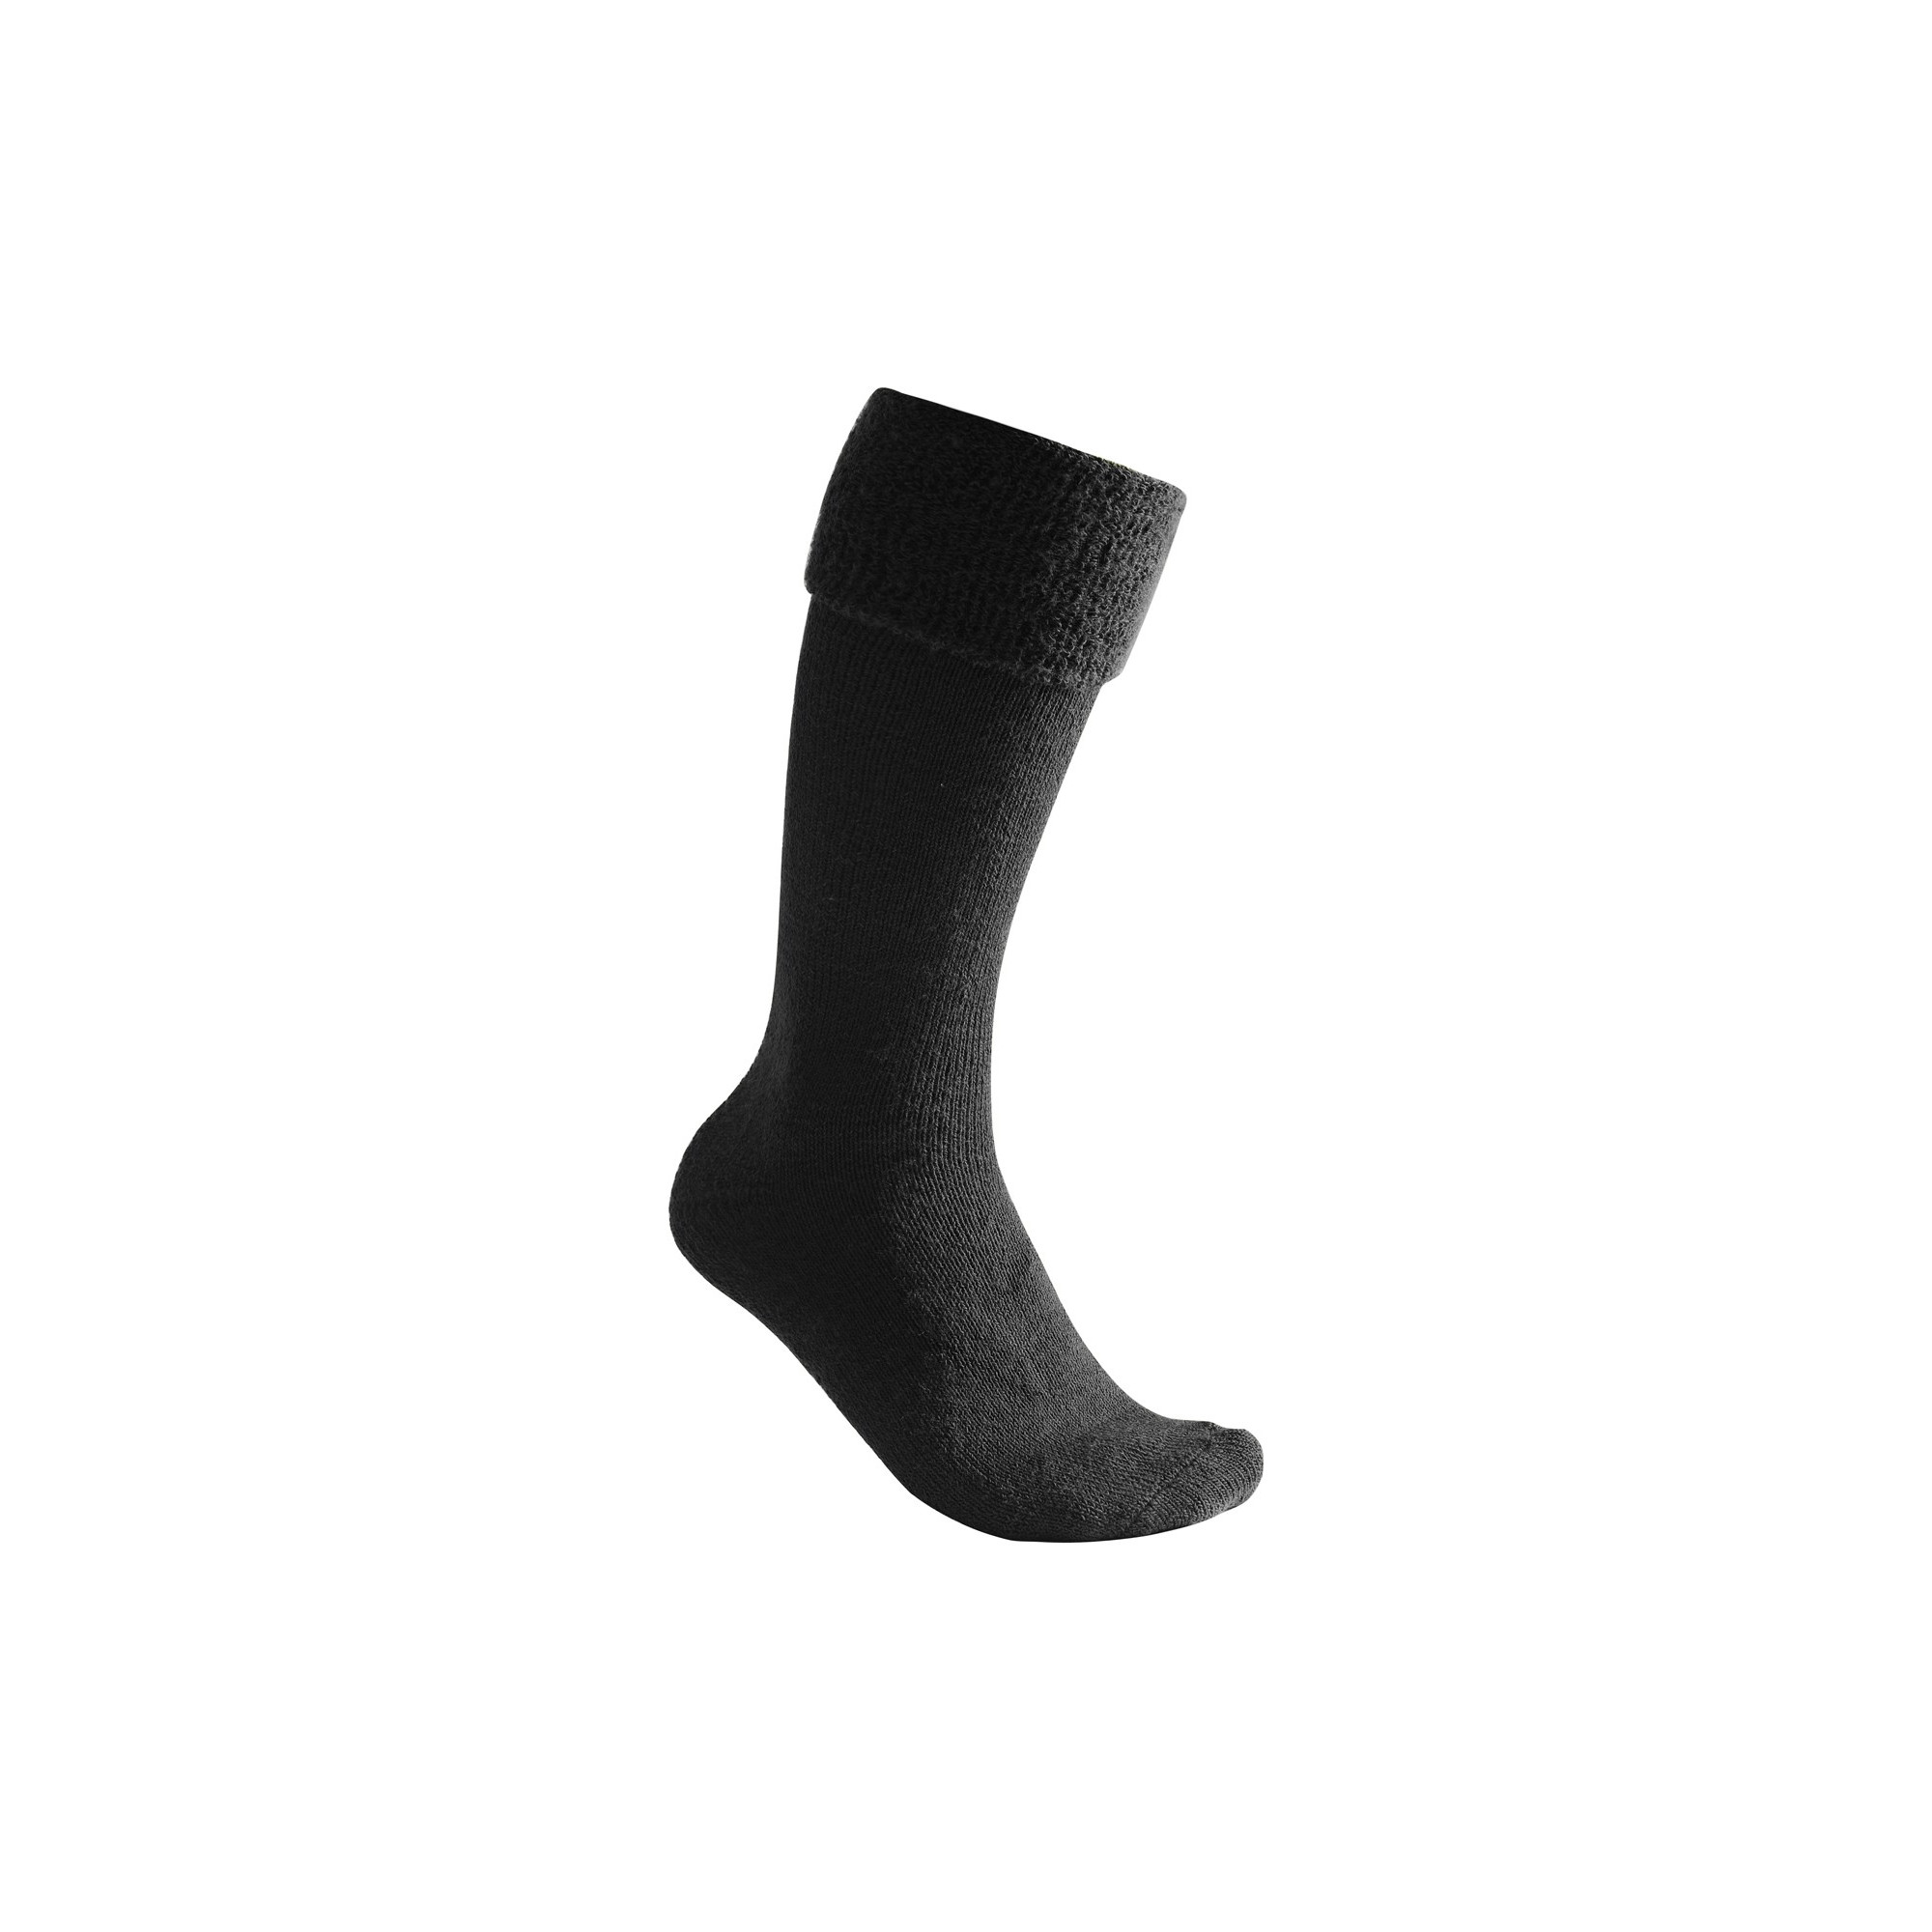 Chaussettes Socks Knee-High 600 WOOLPOWER